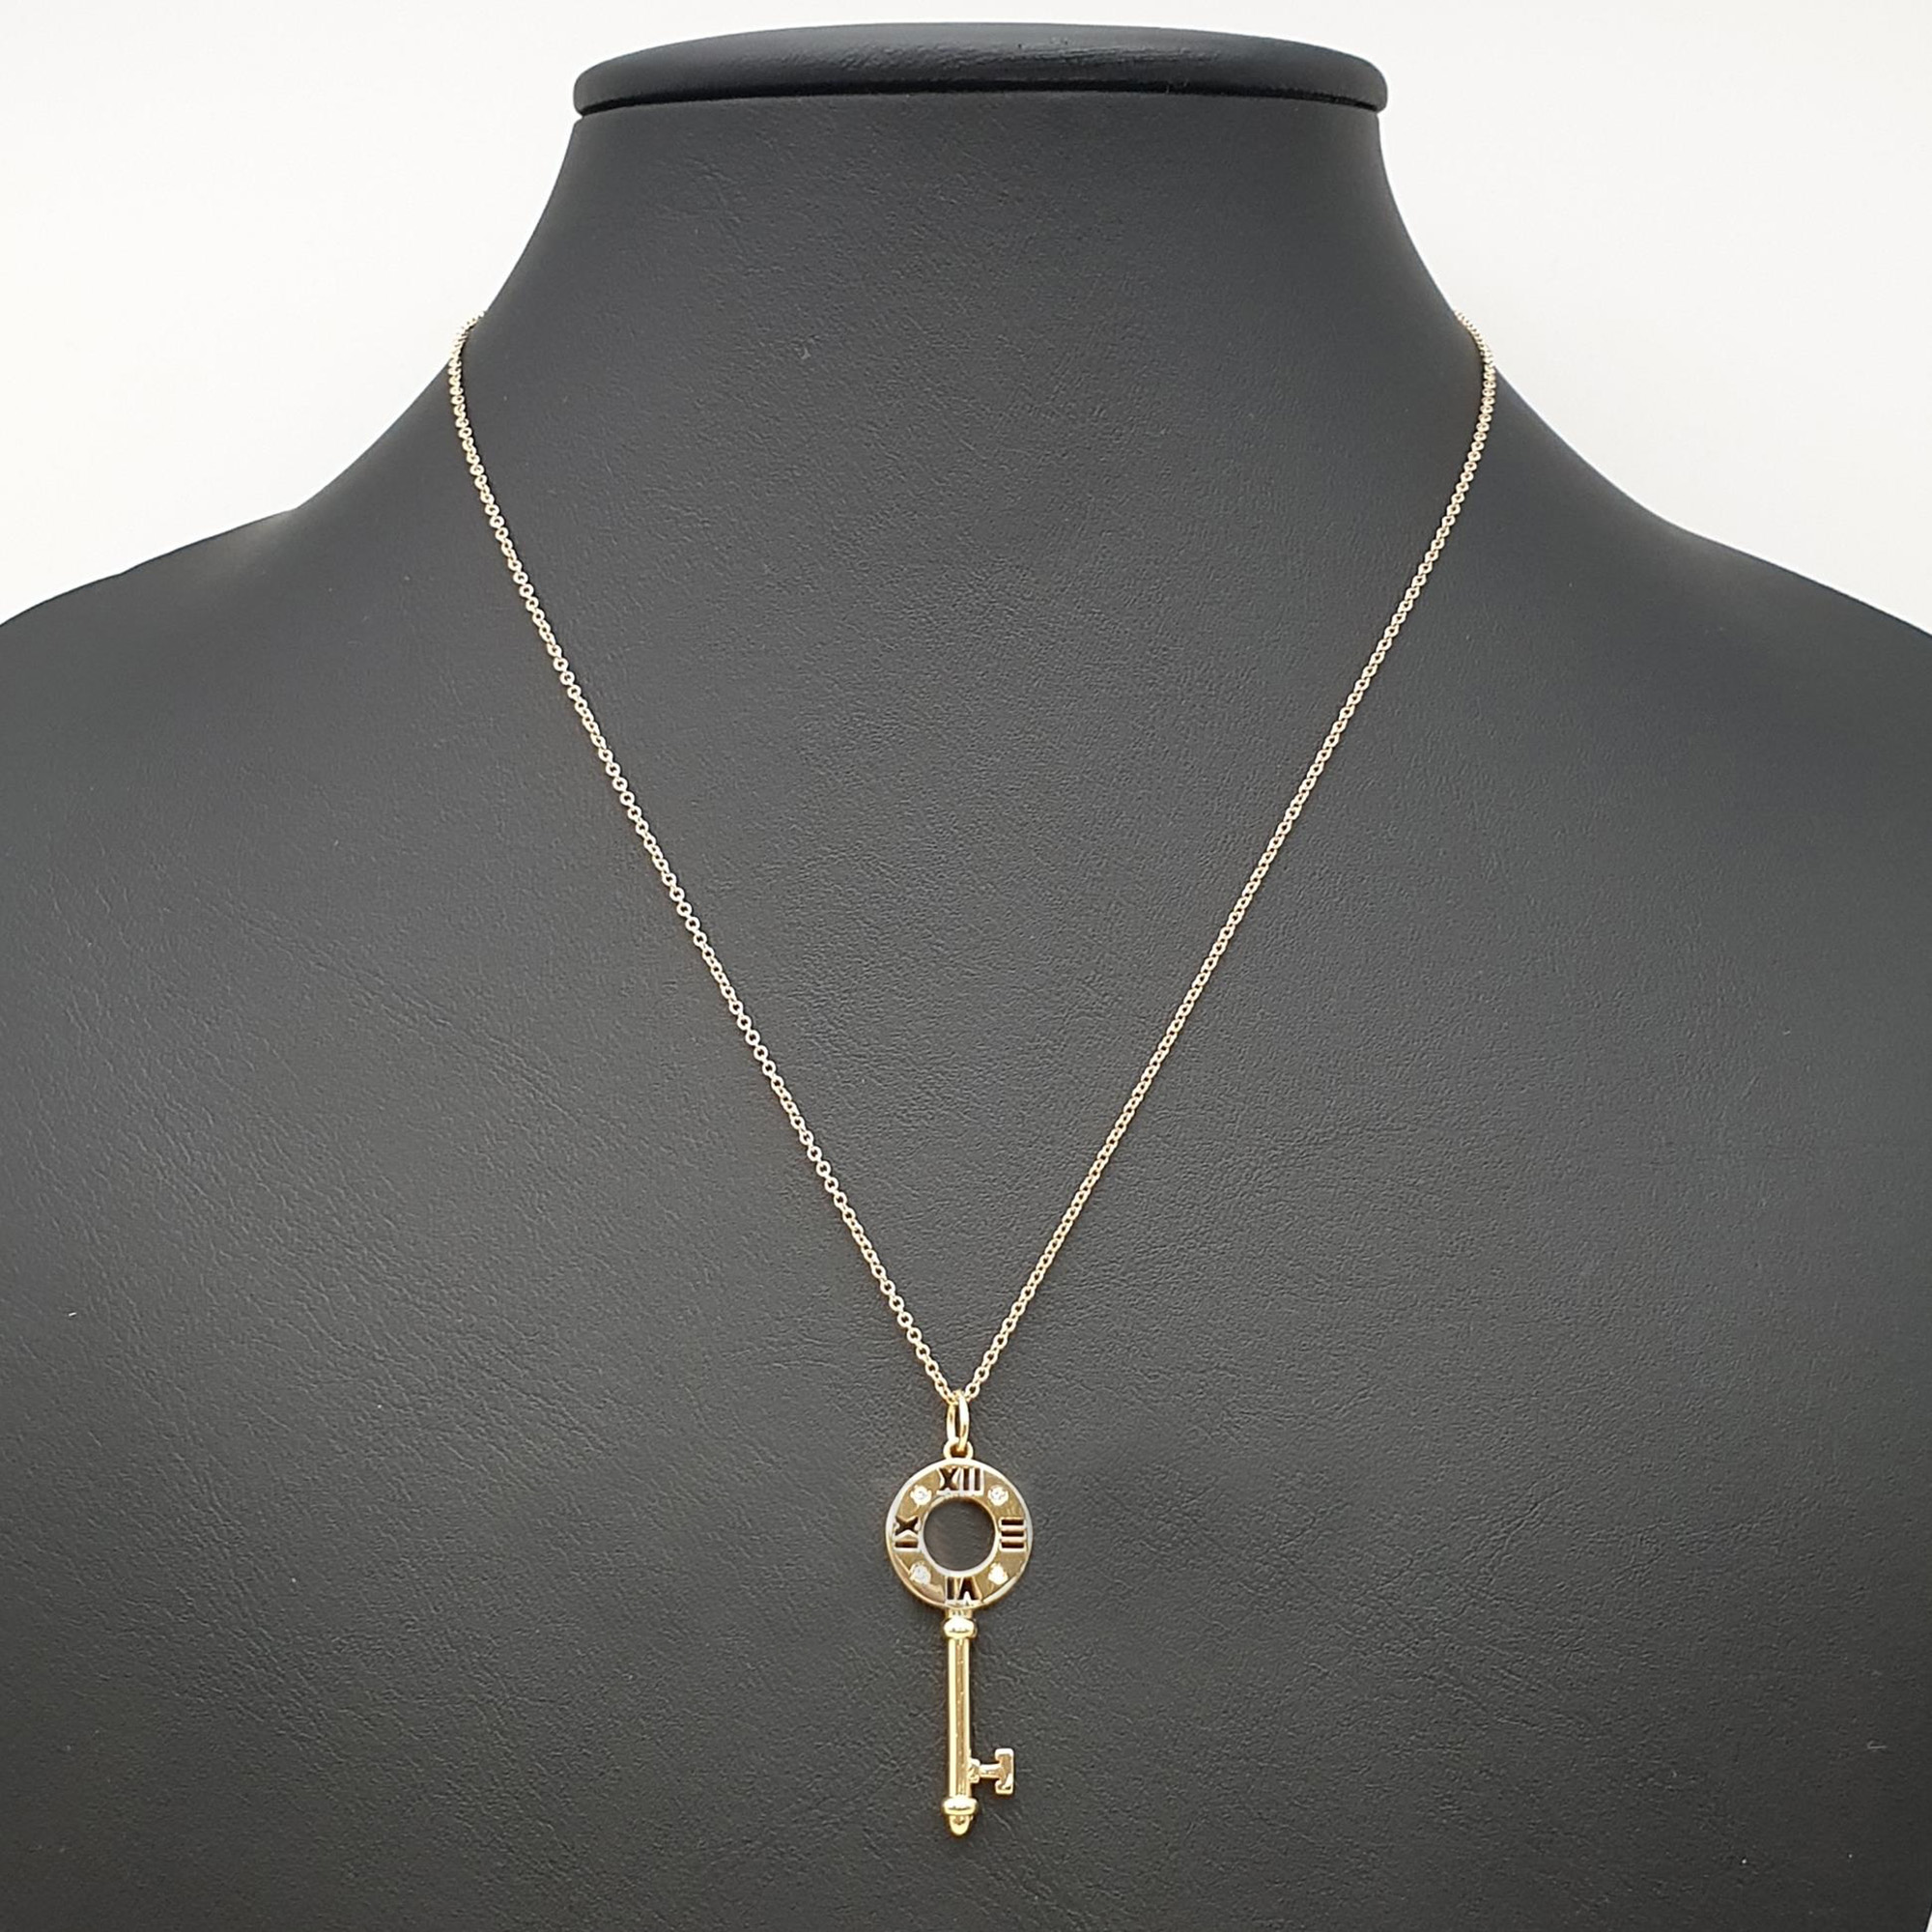 Tiffany & co. 18k white gold diamond atlas key pendant necklace